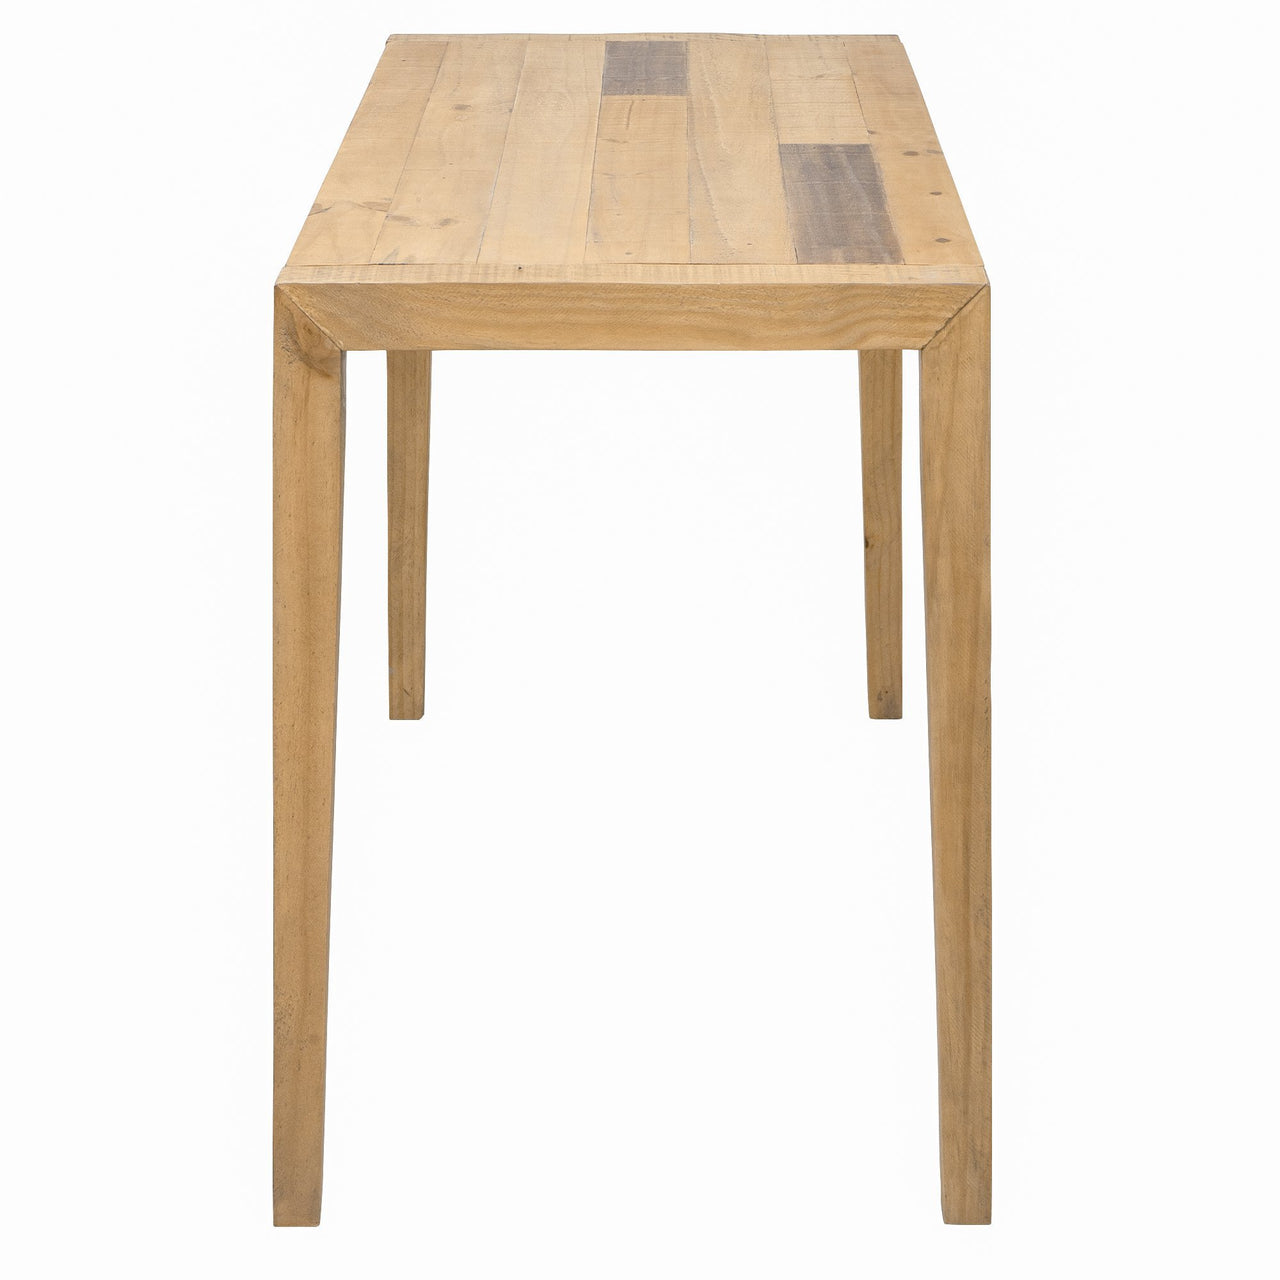 Ashford 47" Reclaimed Wood Home Office Desk Desk AndMakers 